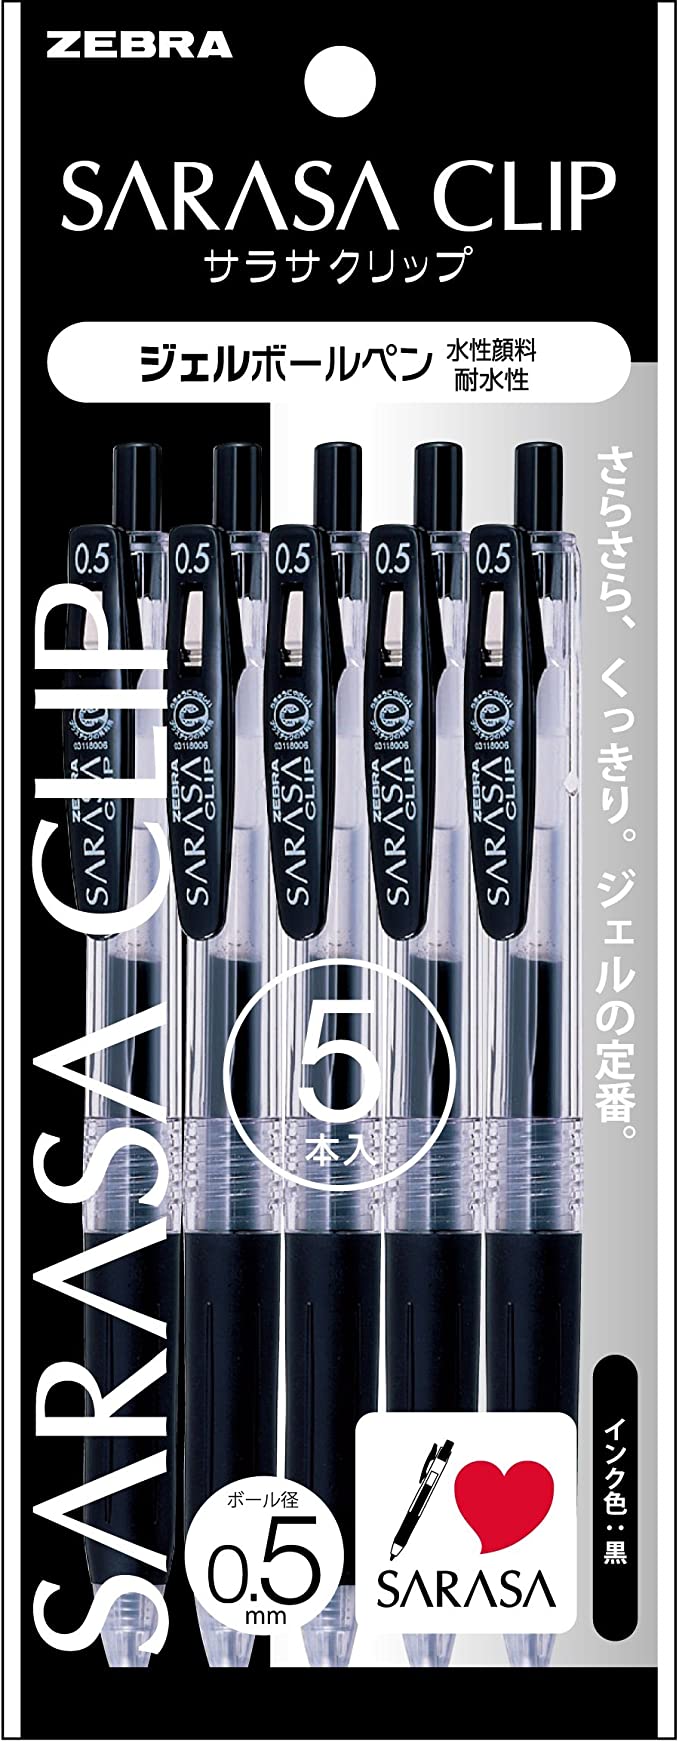 A pack of black Zebra sarasa clip gel pens.